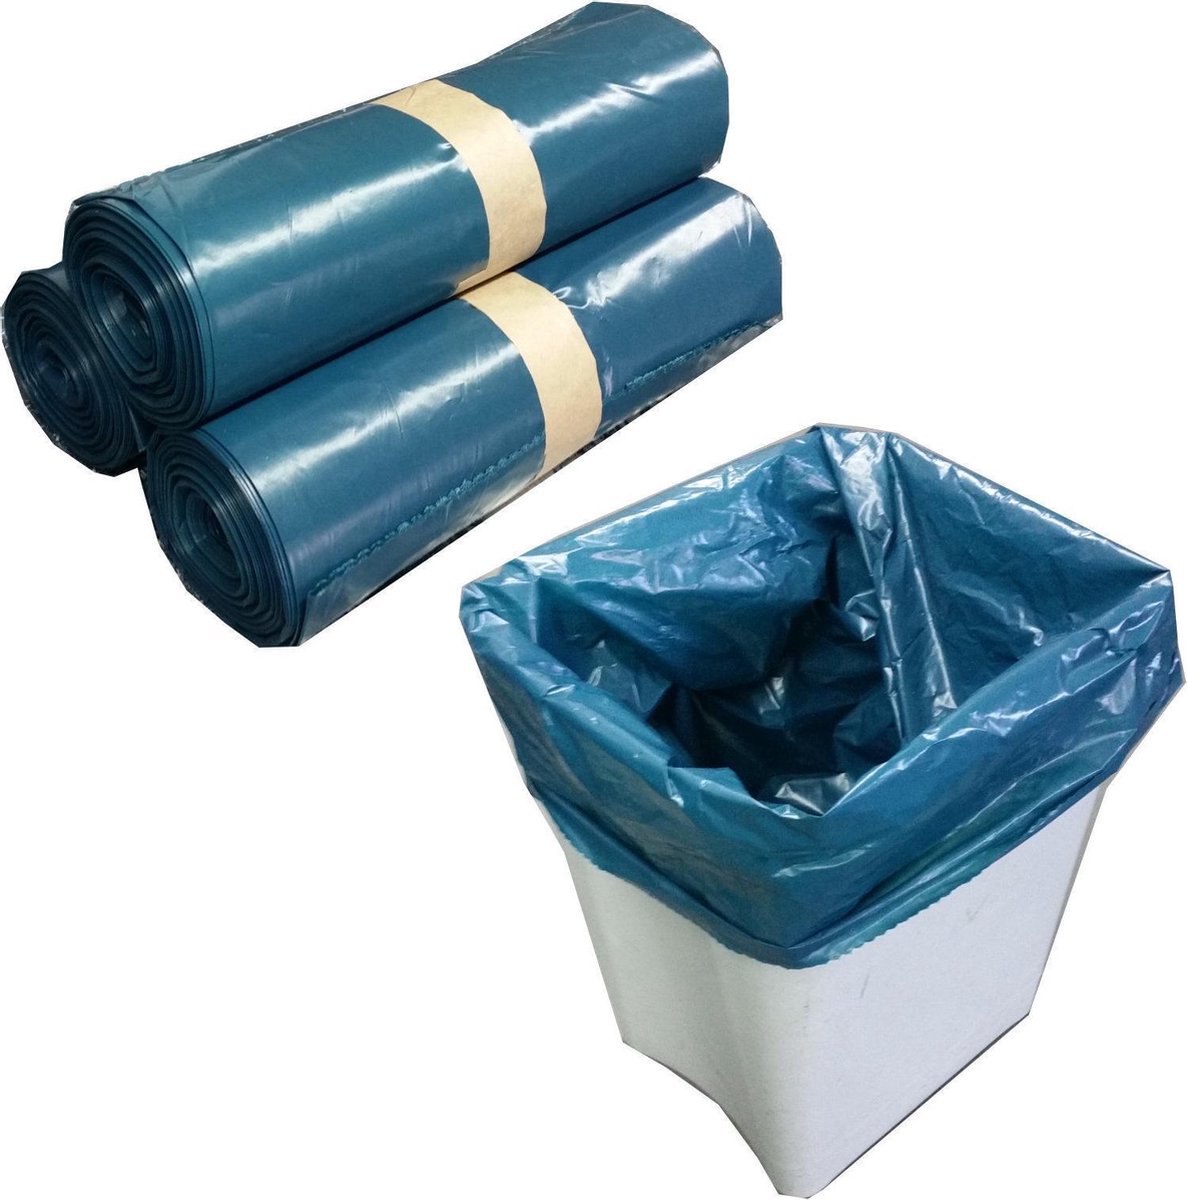 Secolan Sac poubelle, avec tirant, bleu/noir, 120 litres